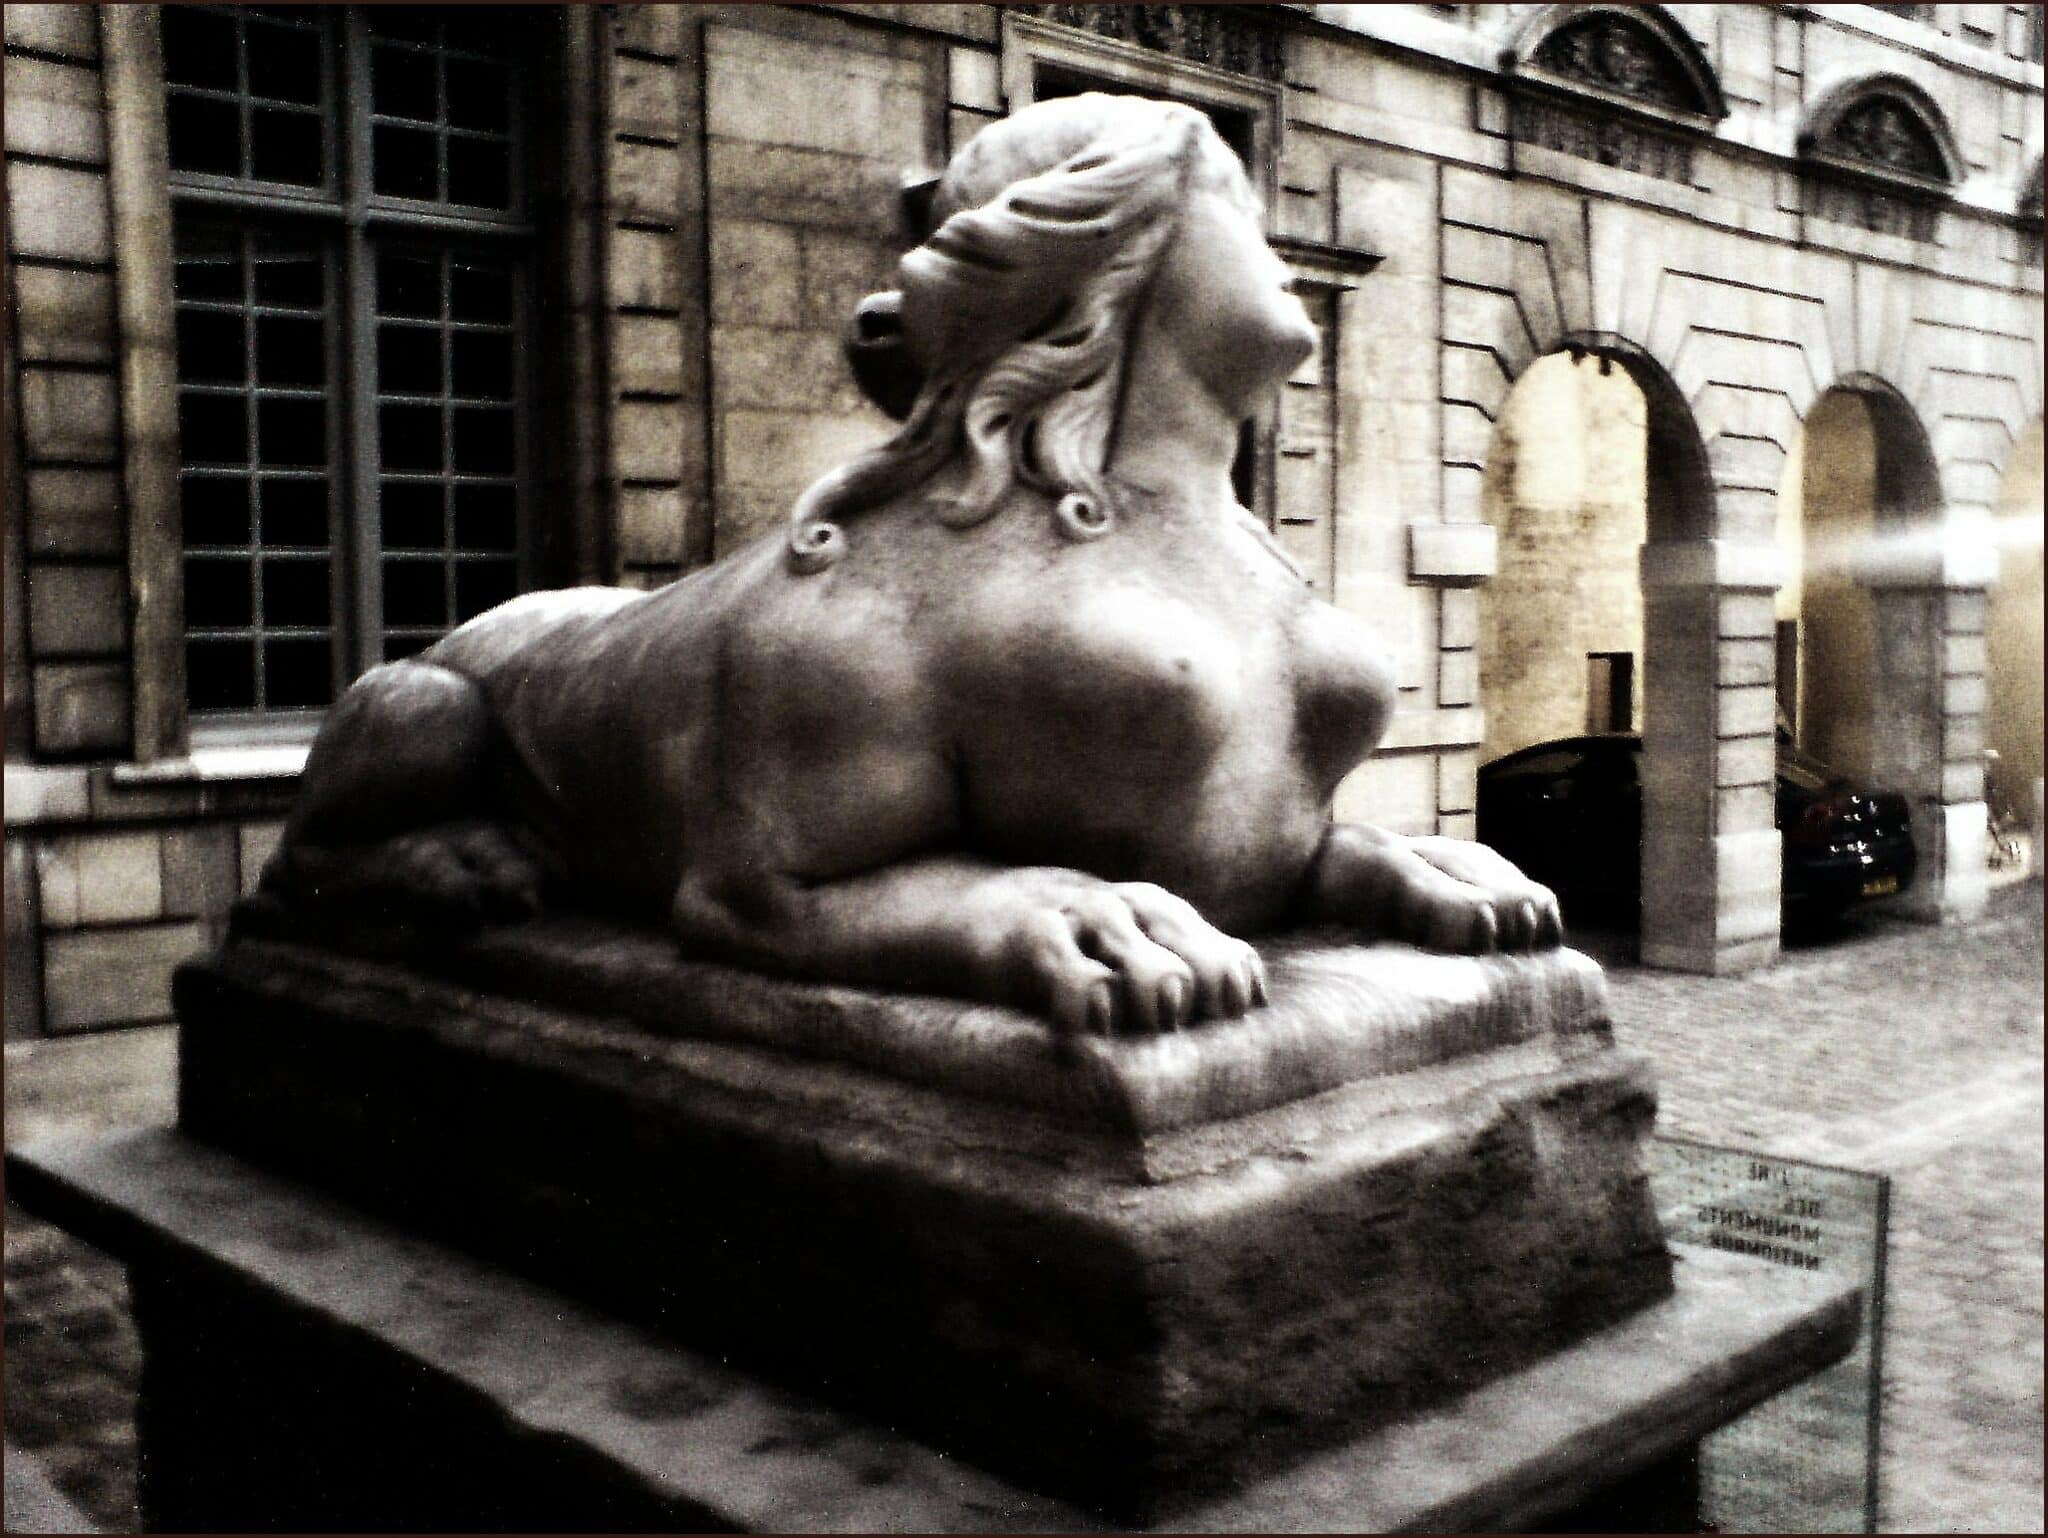 Sphinx de l'Hôtel de Sully, Paris